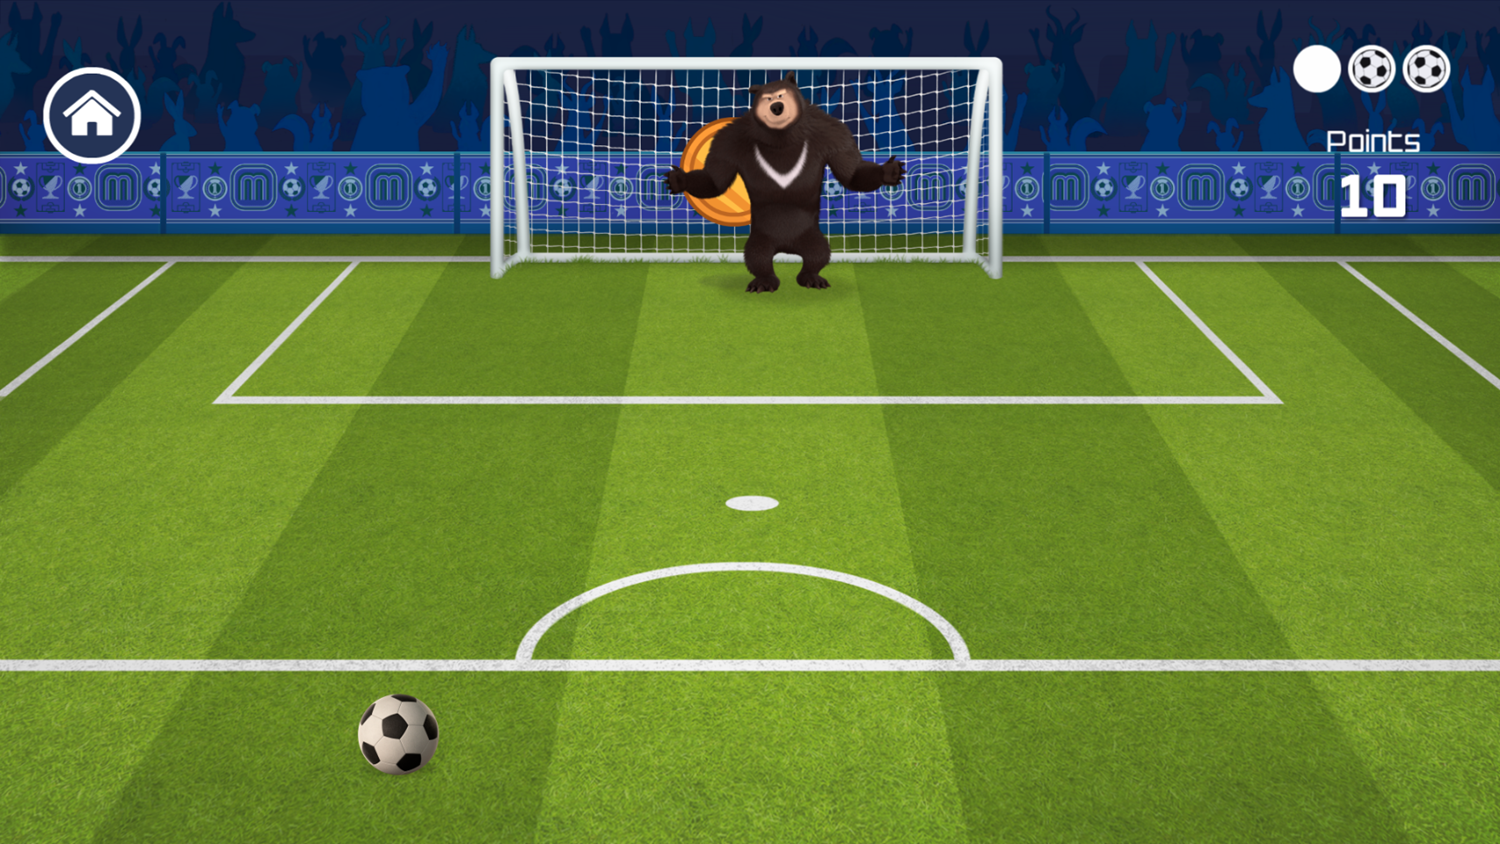 Masha and the Bear Football Game Play Screenshot.